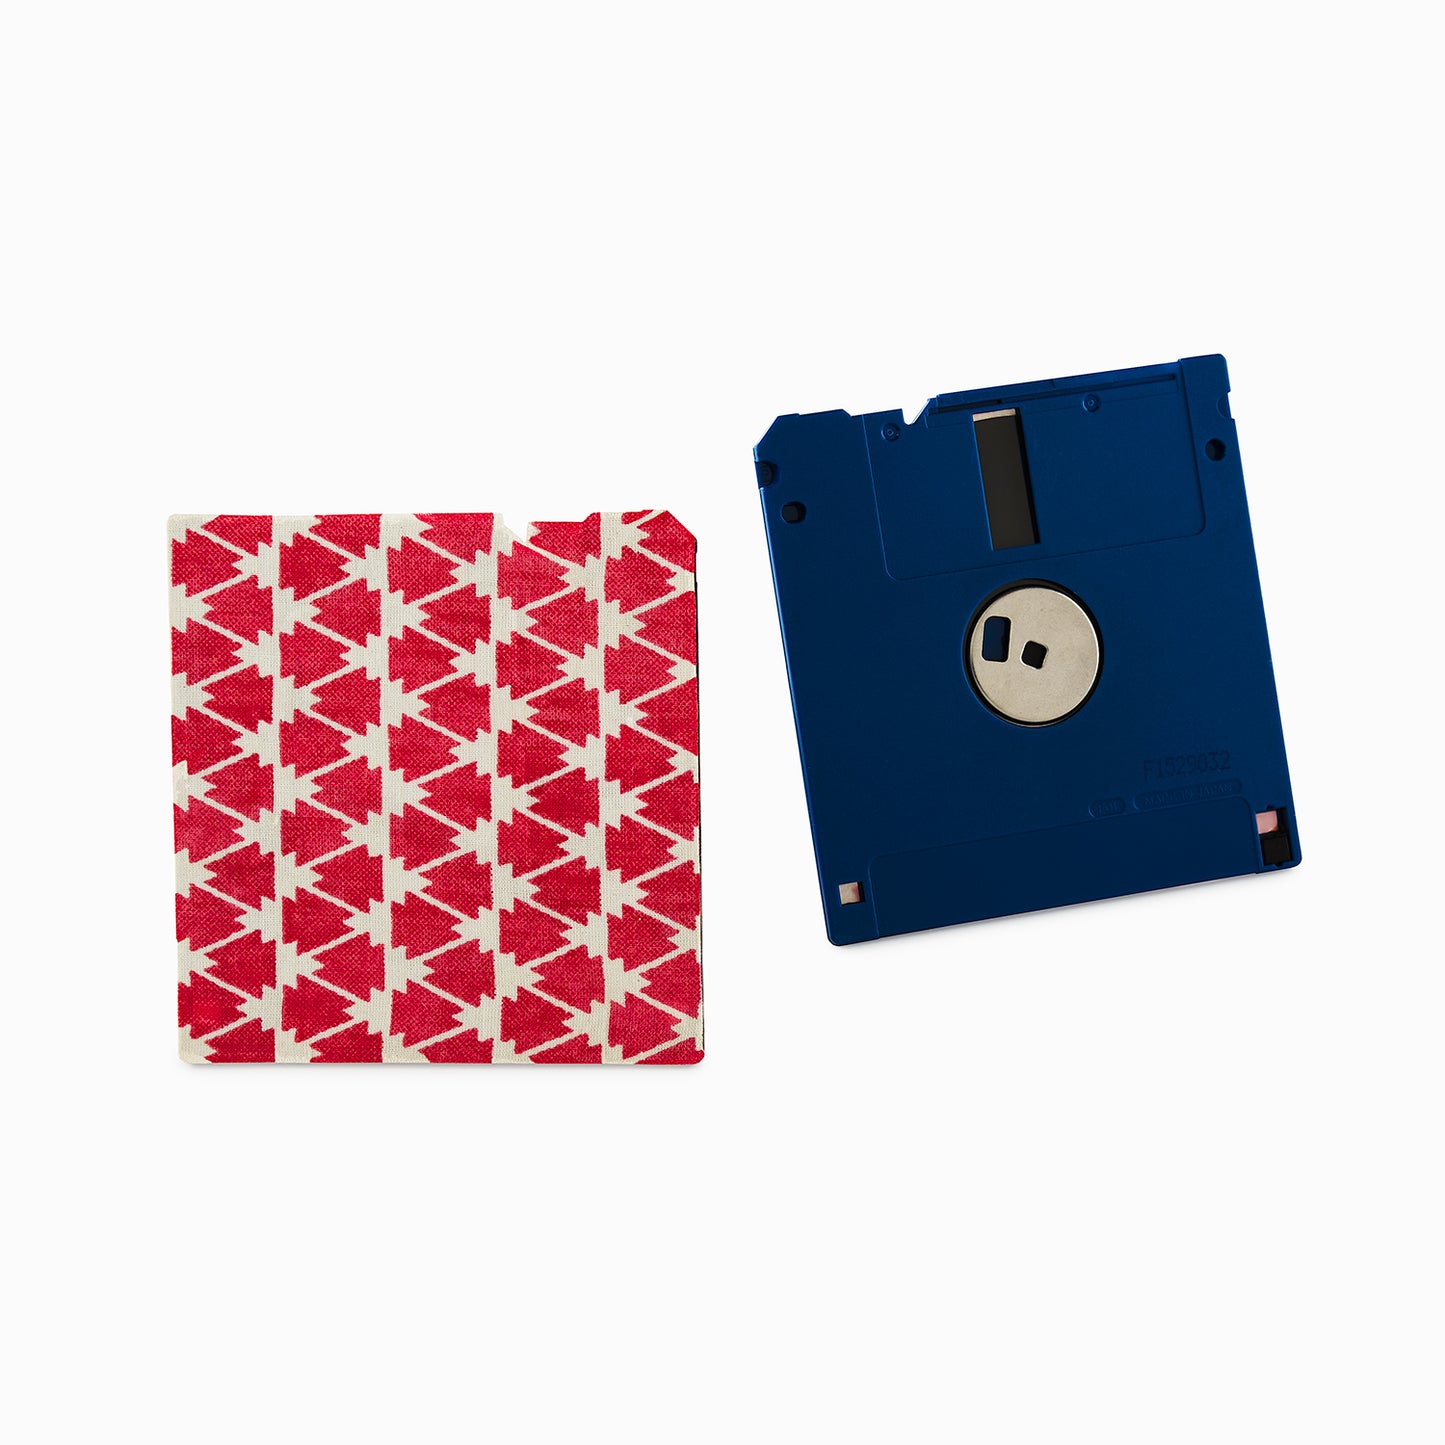 Punch Pink - Floppy Disk Coaster Set of 2